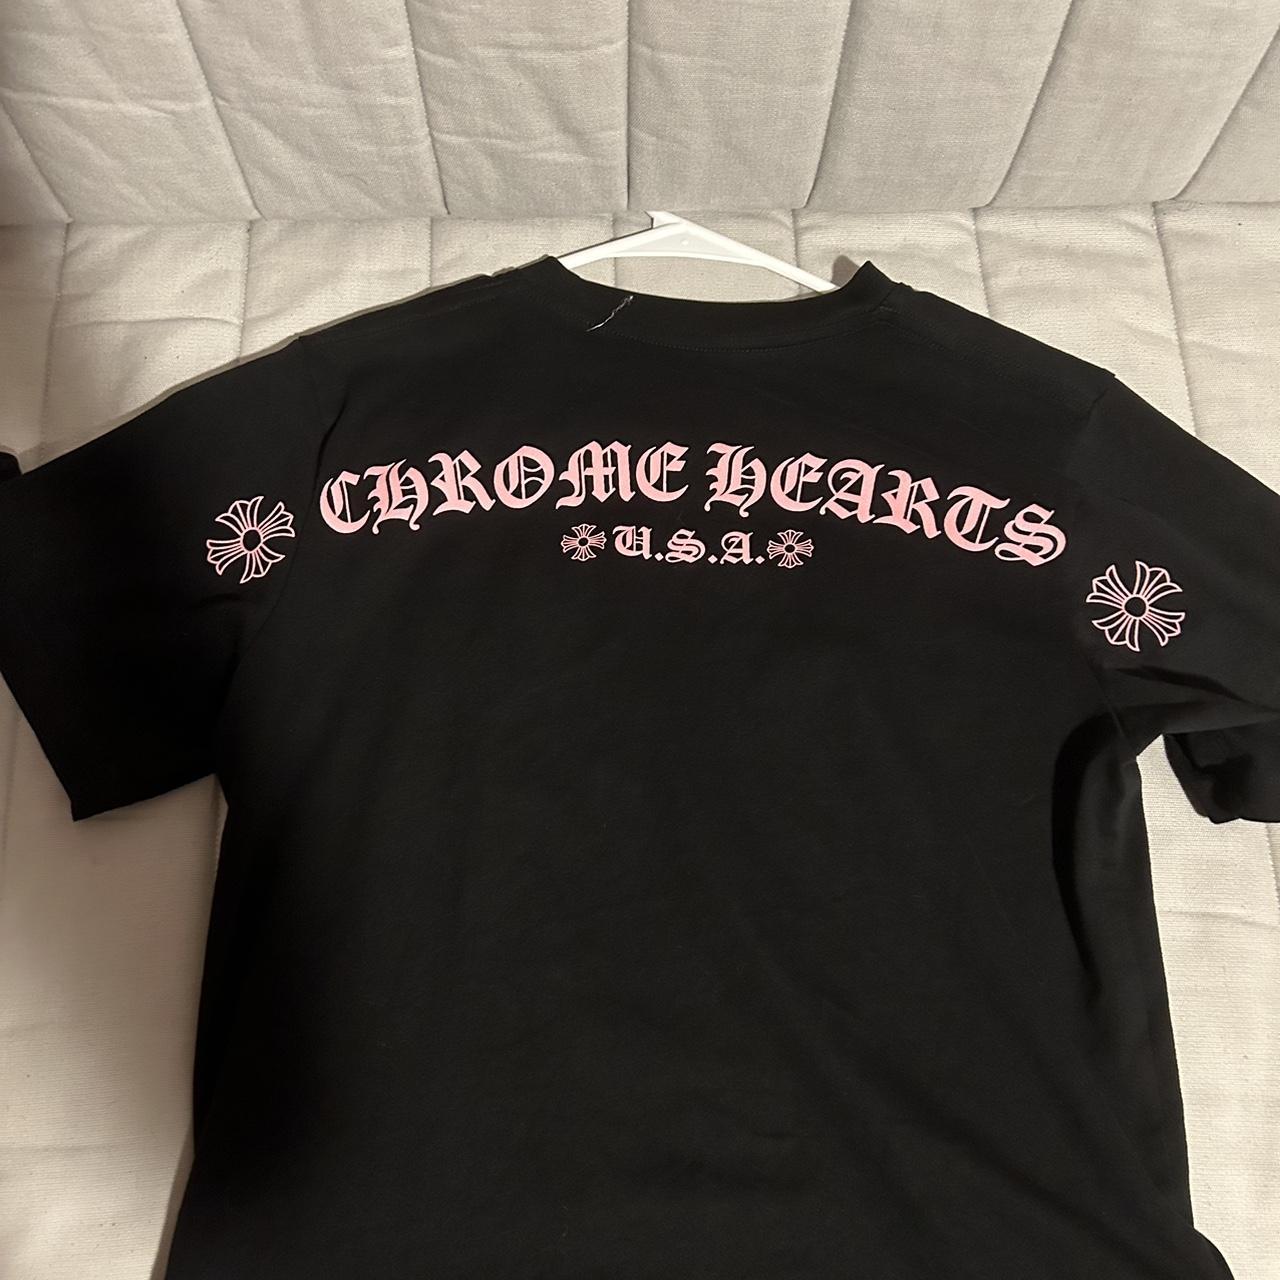 Chrome Hearts Men's T-shirt | Depop